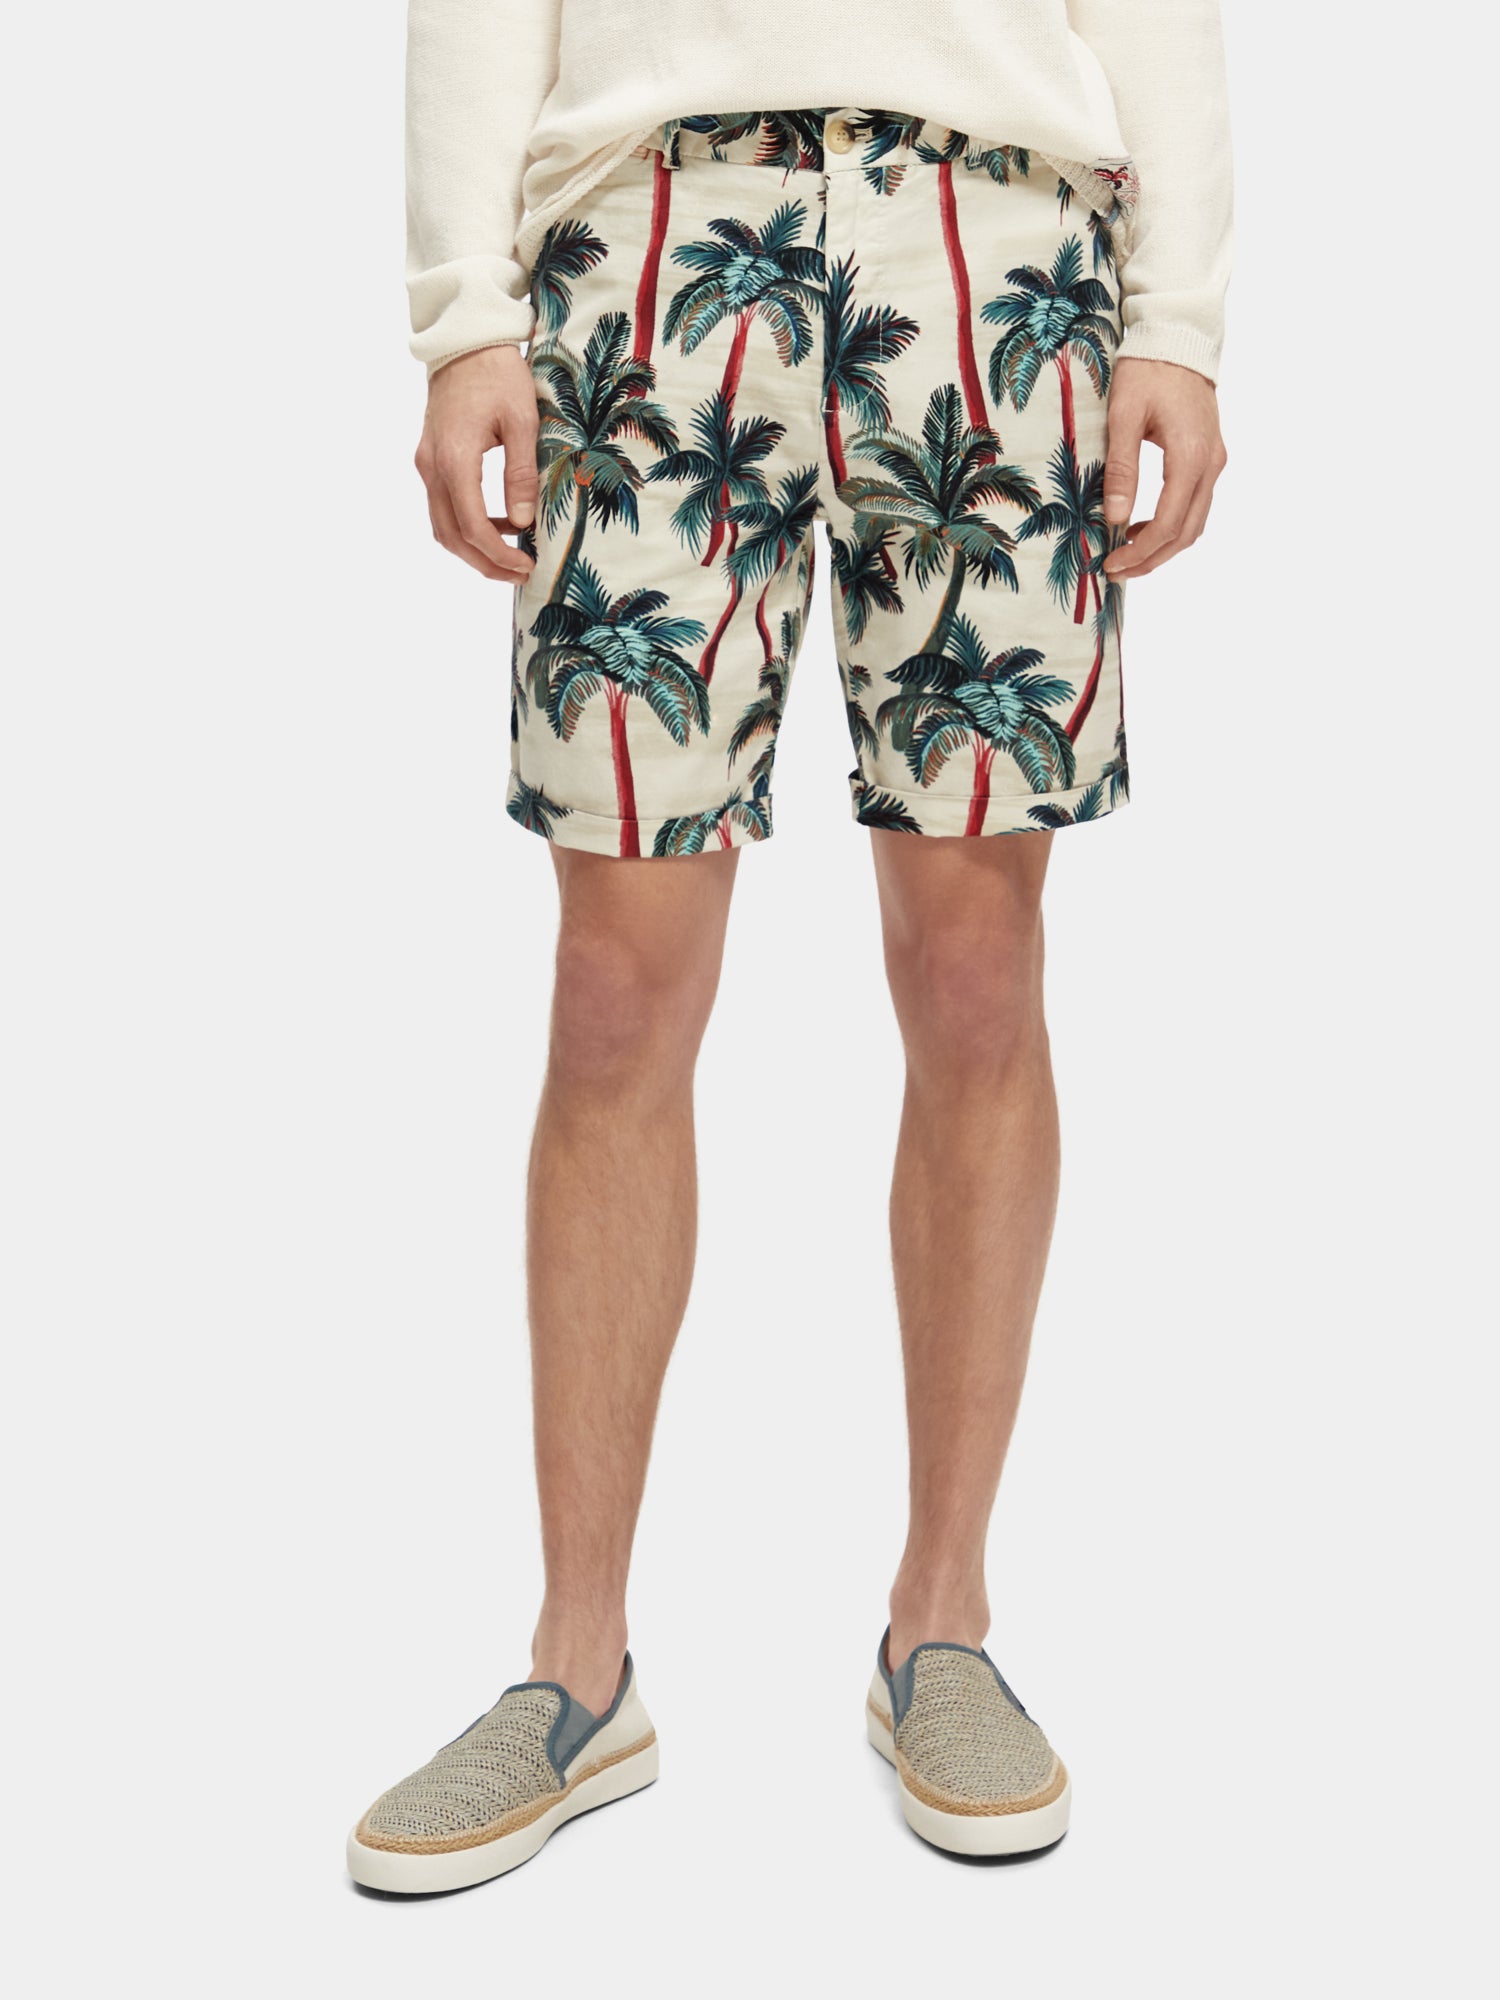 Stuart garment-dyed pima cotton shorts - Offwhite Palmtrees Aop